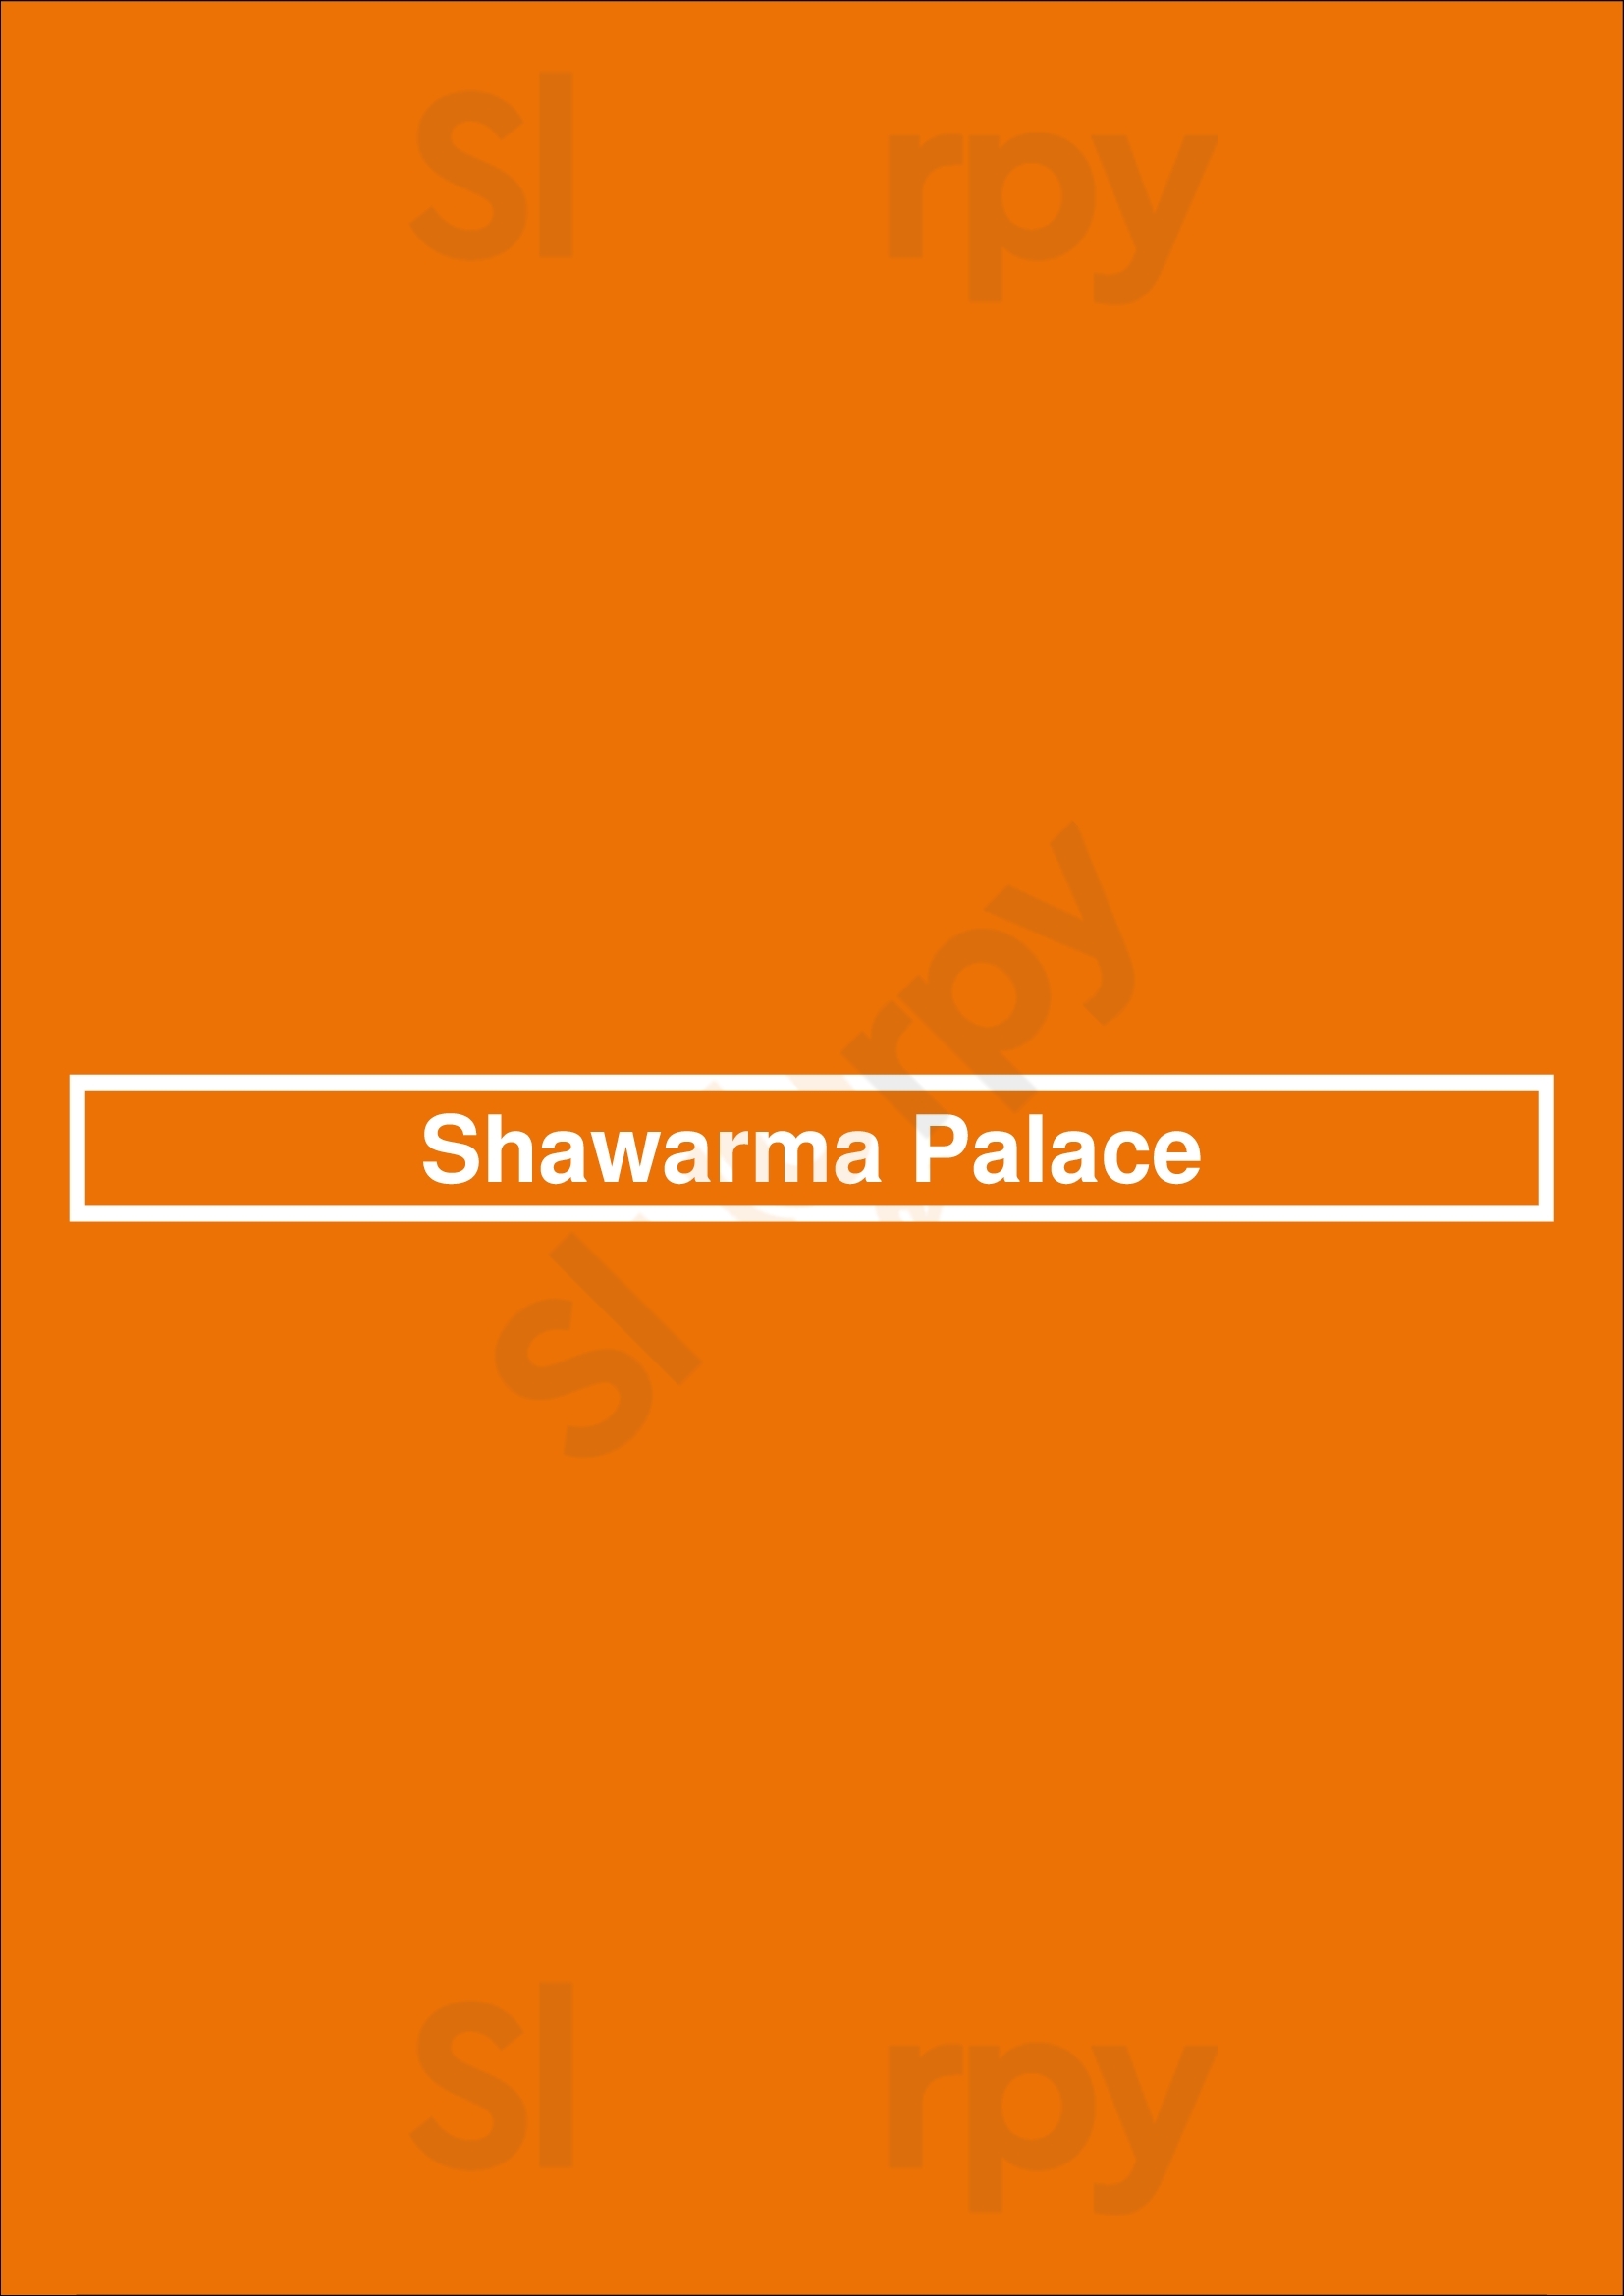 Shawarma Palace Airdrie Menu - 1